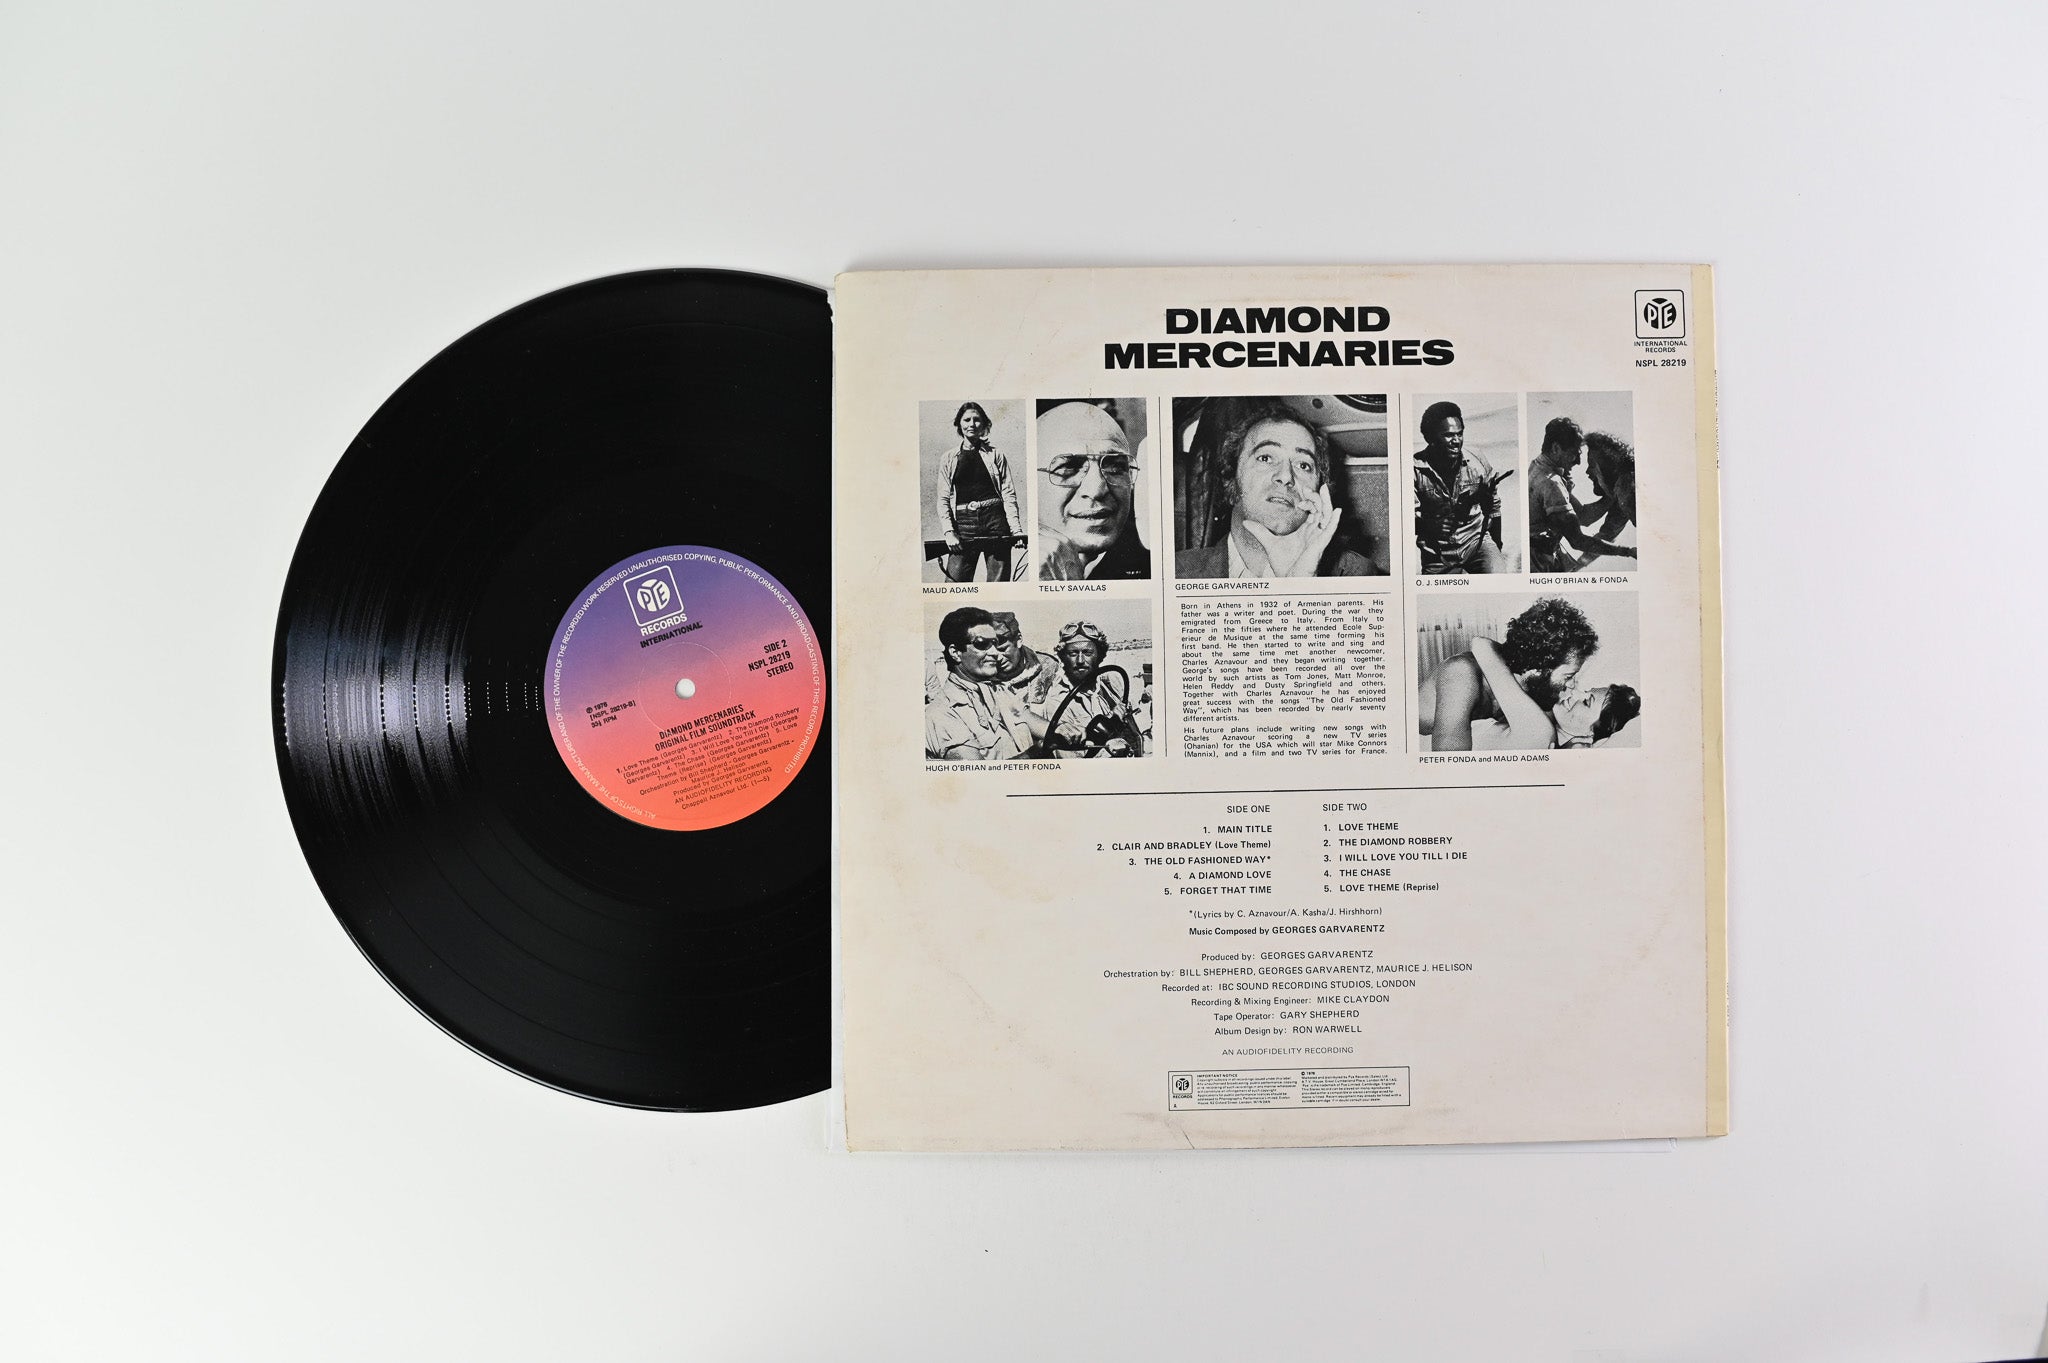 Georges Garvarentz - Diamond Mercenaries (Original Soundtrack) on PYE International